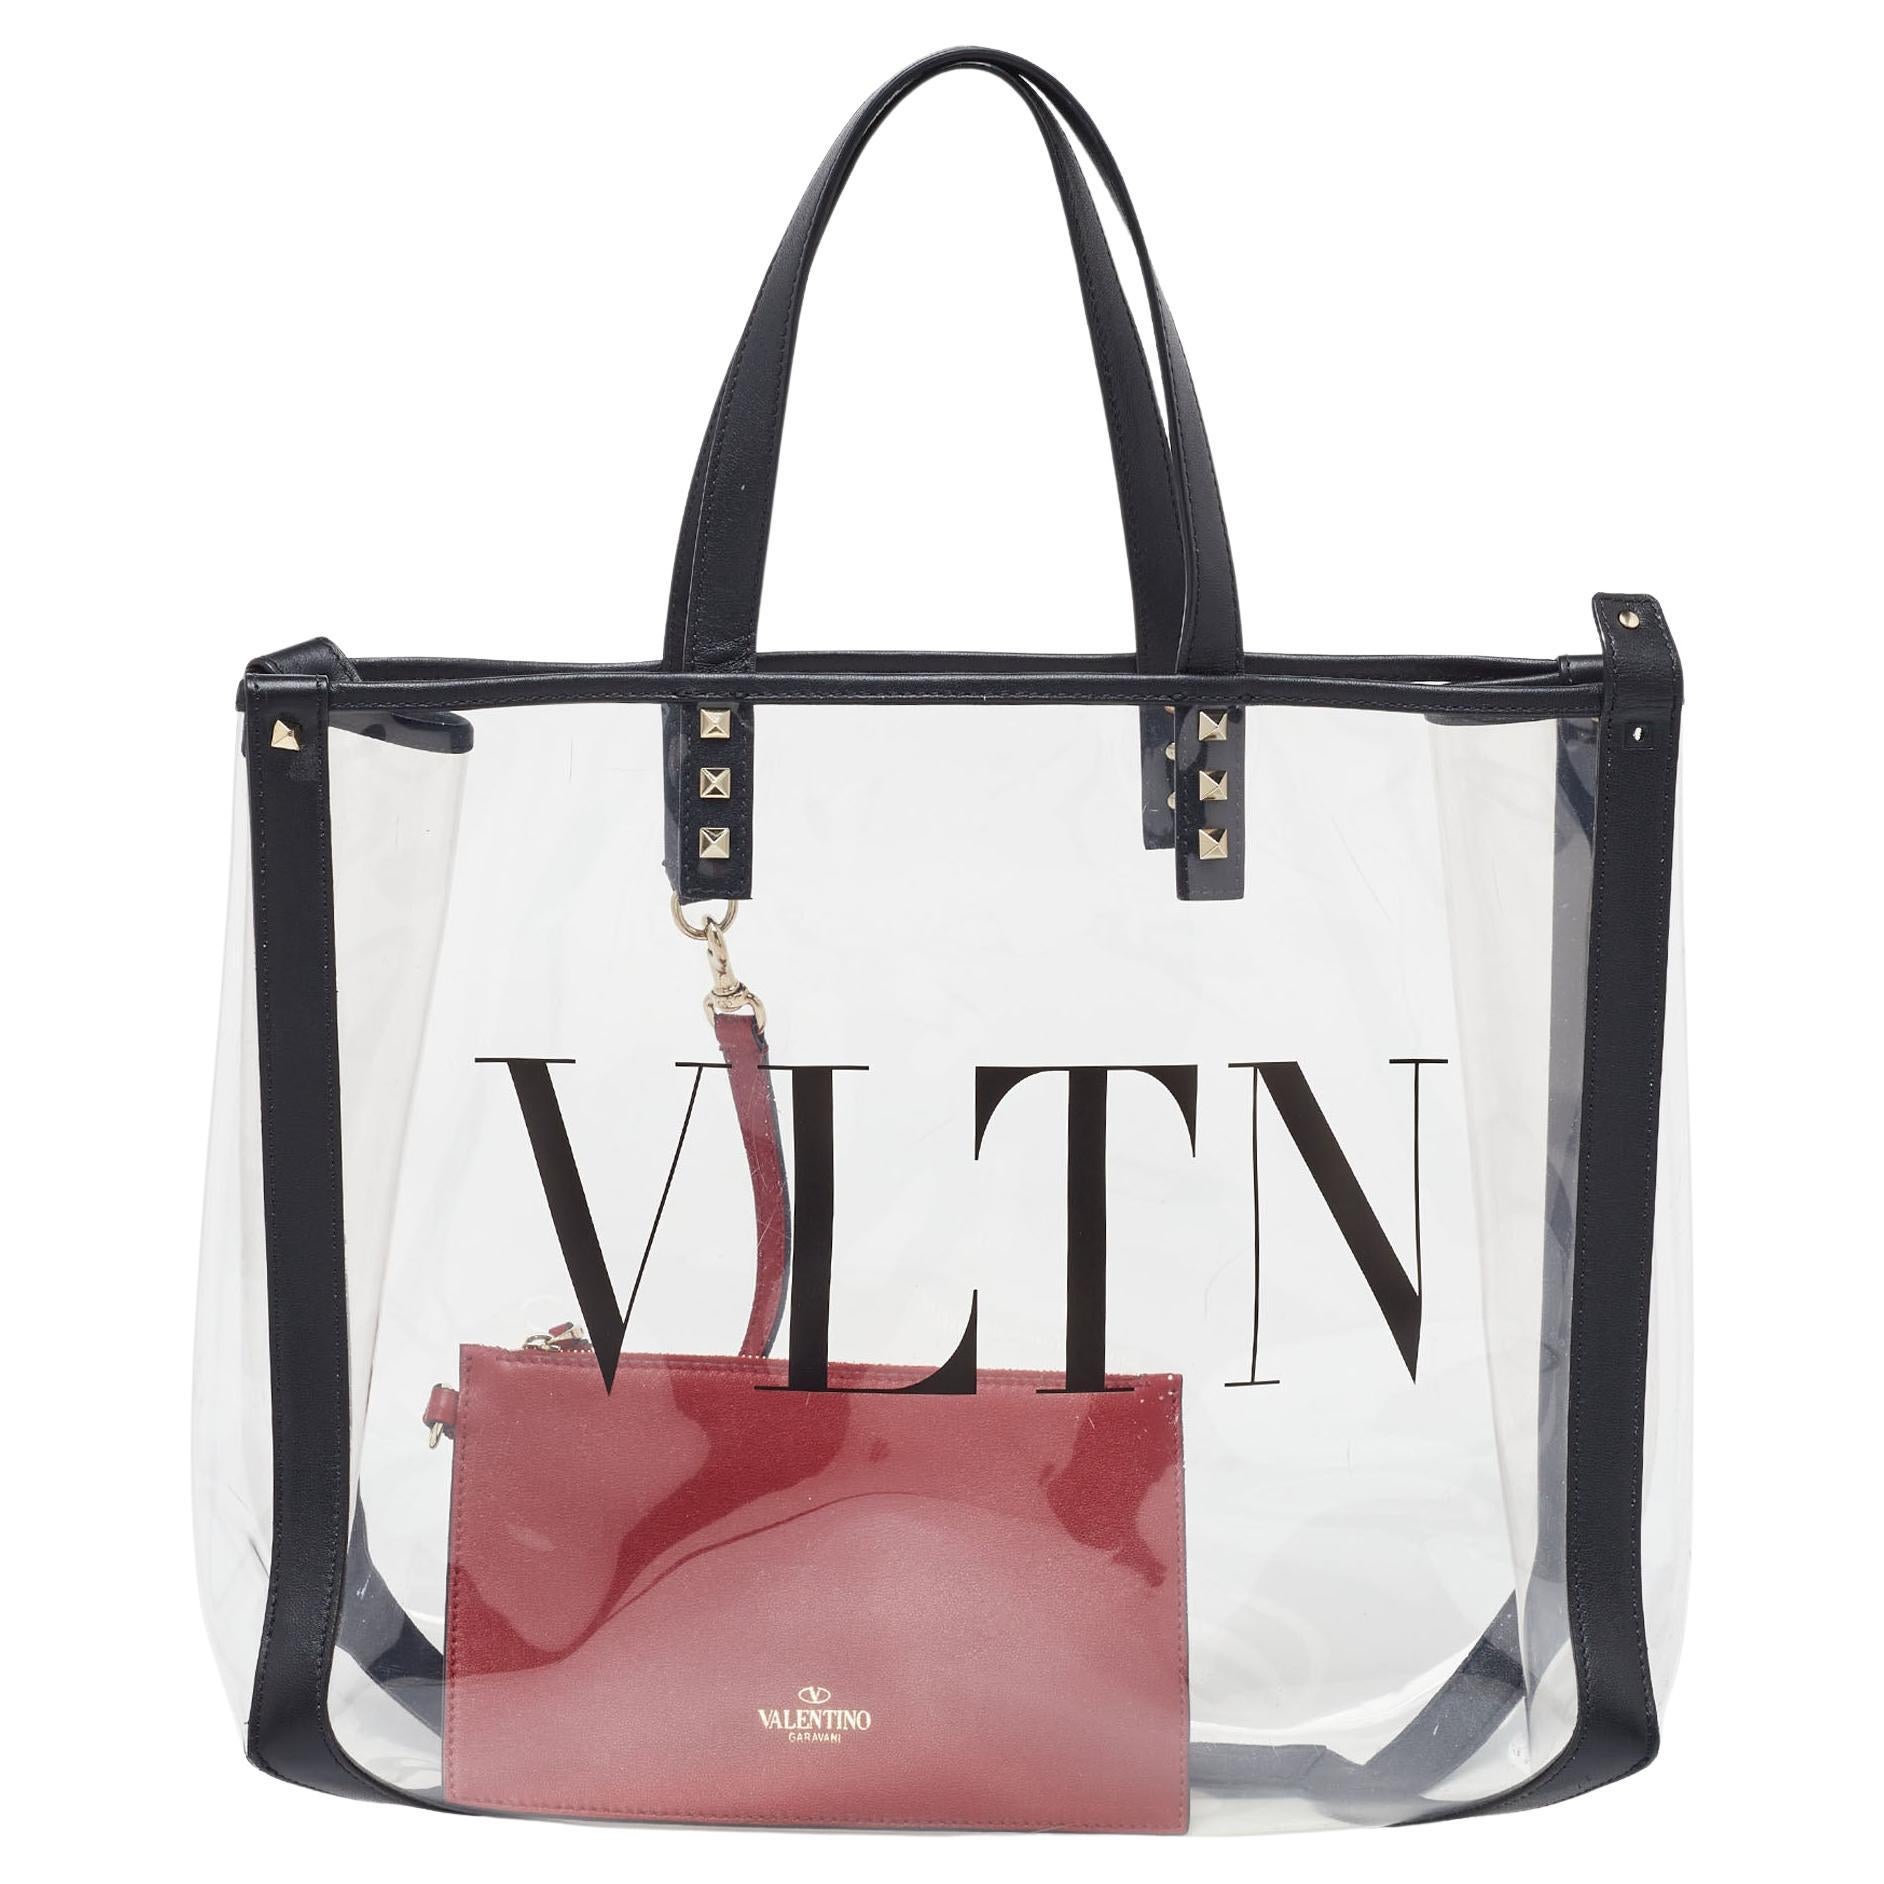 Valenitno Transparent/Black PVC and Leather VLTN Shopper Tote For Sale